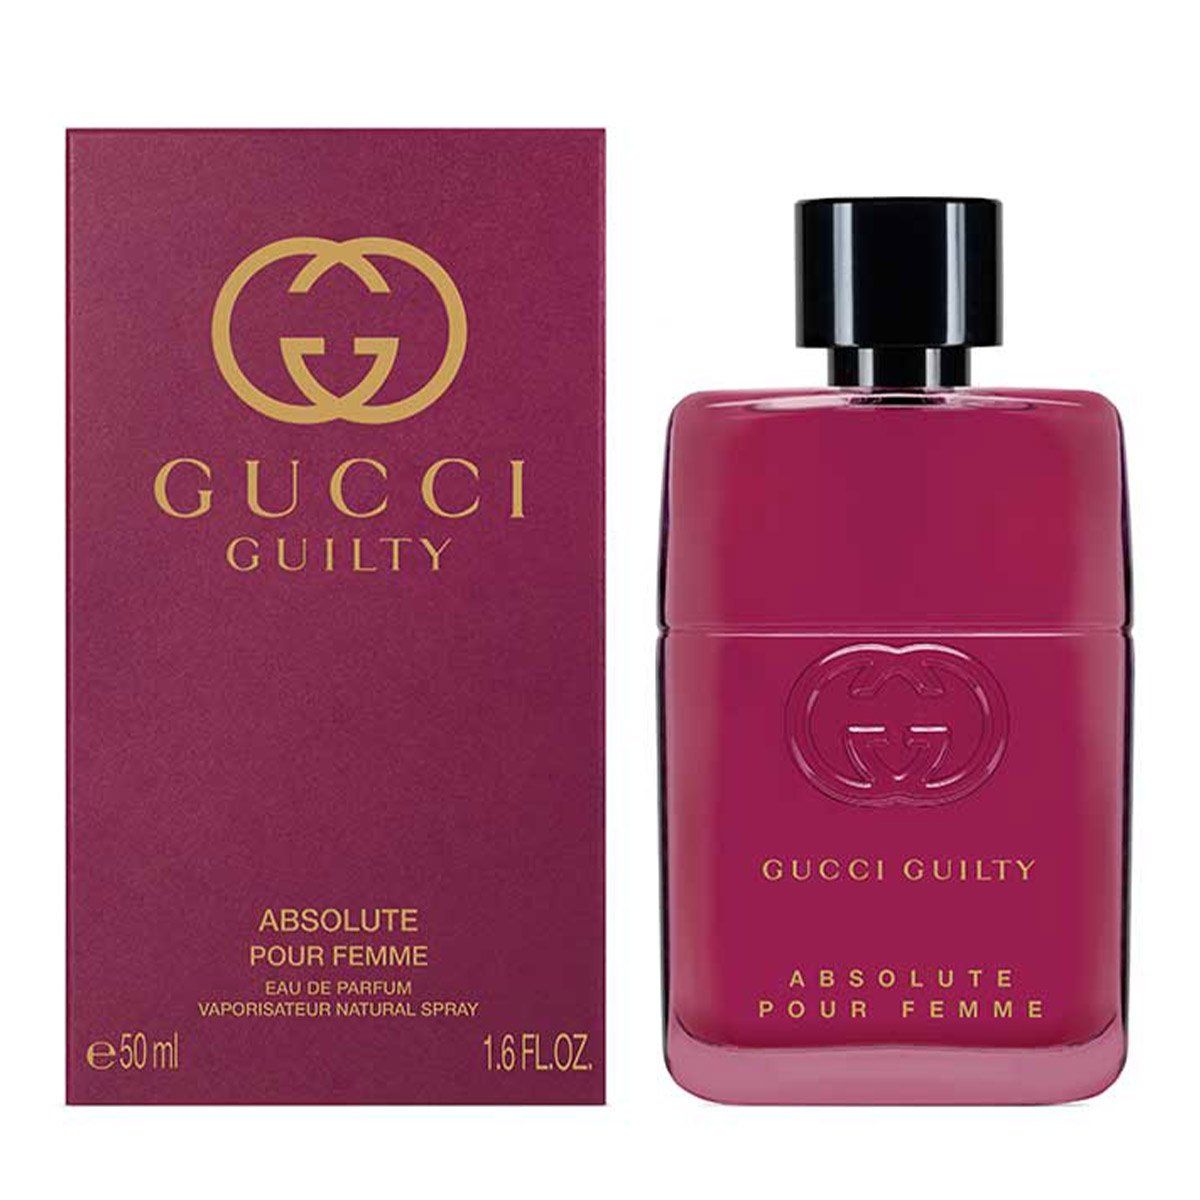  Gucci Guilty Absolute Pour Femme 